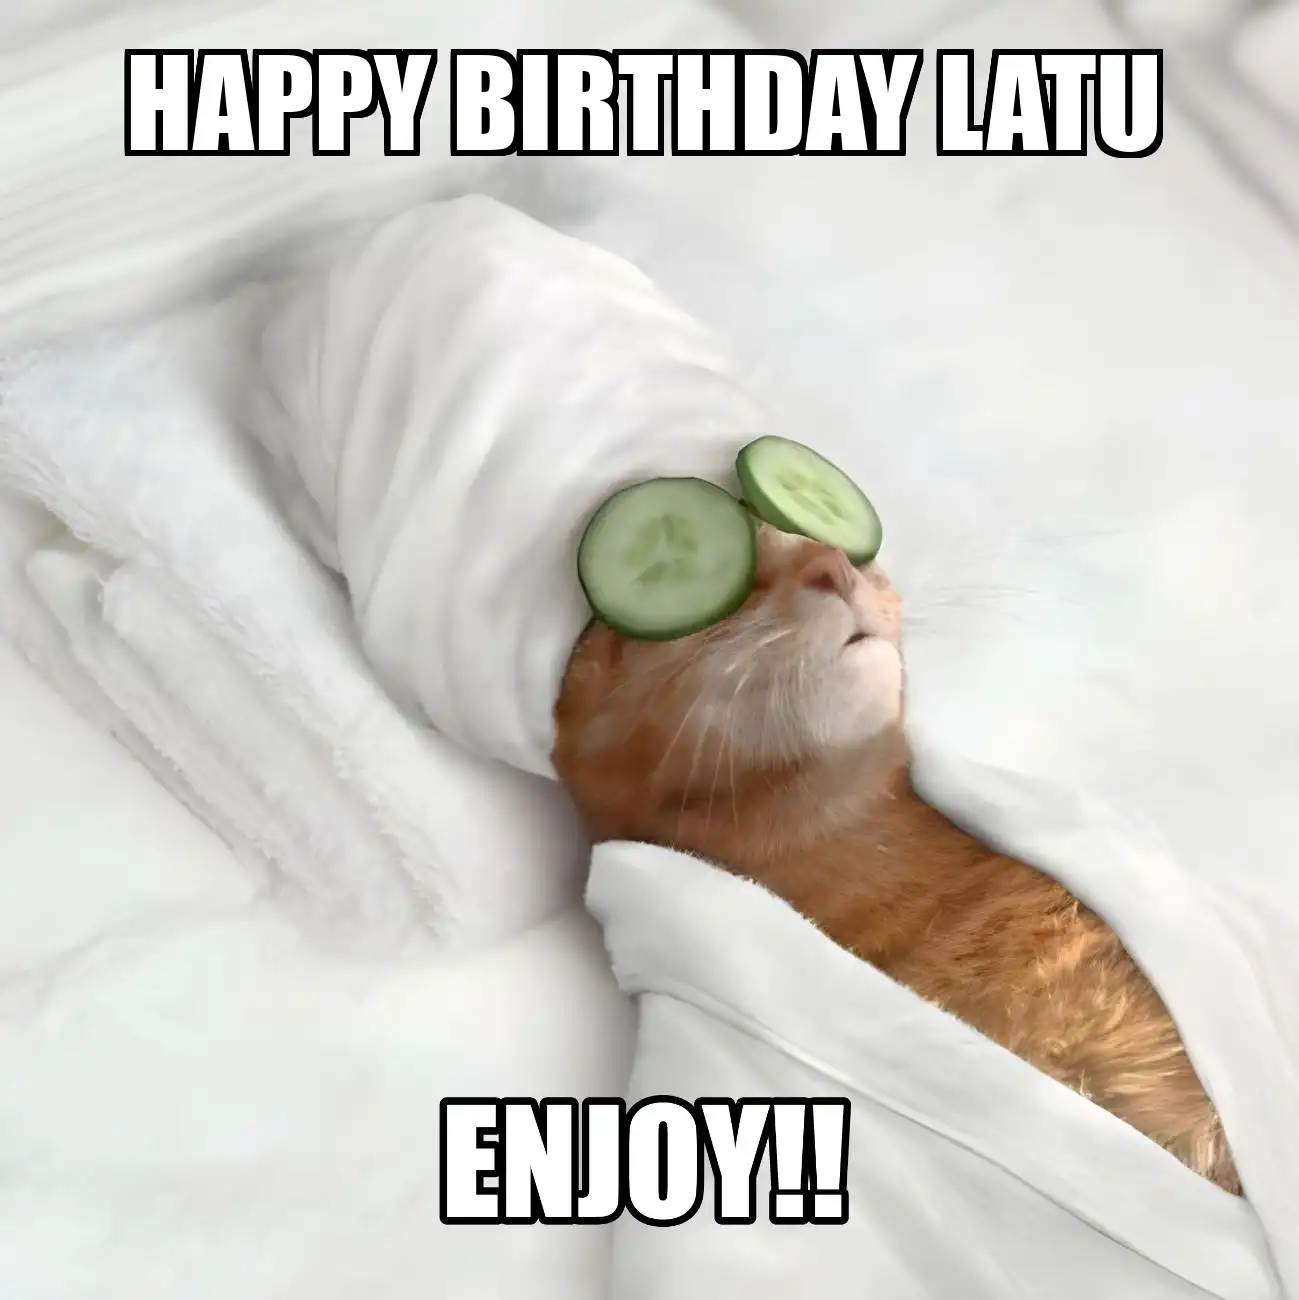 Happy Birthday Latu Enjoy Cat Meme